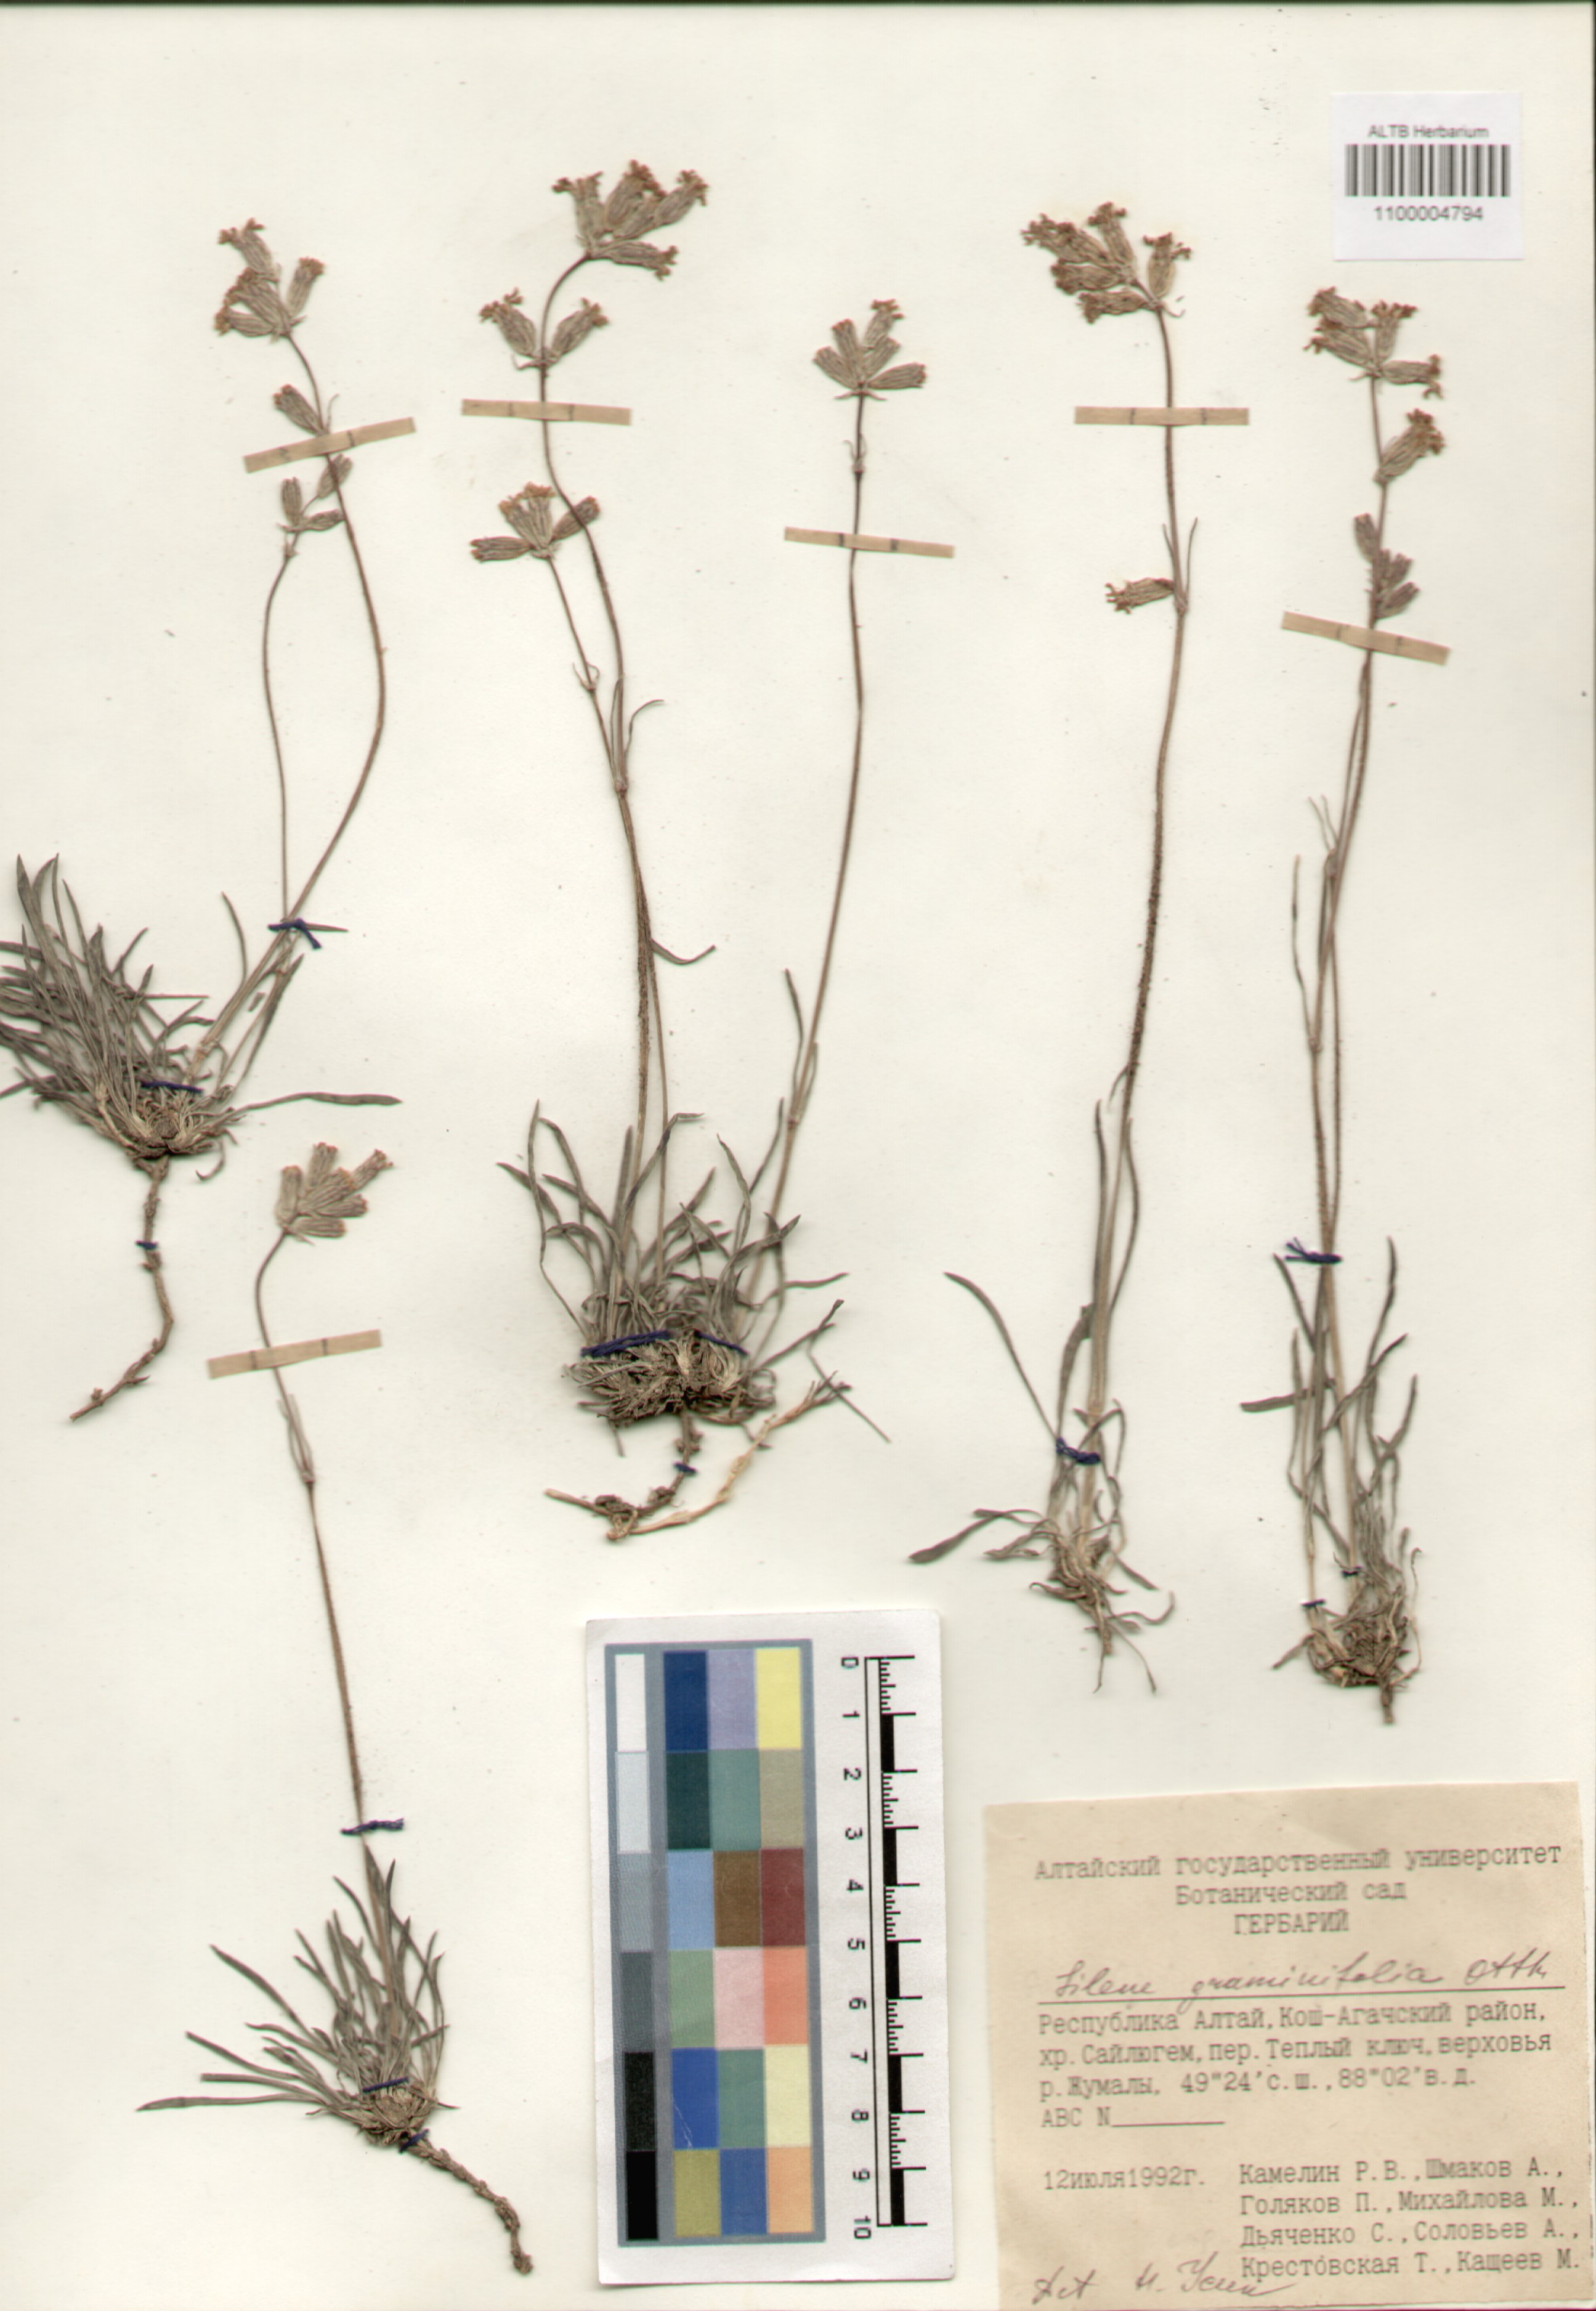 Caryophyllaceae,Silene graminifolia Otth.